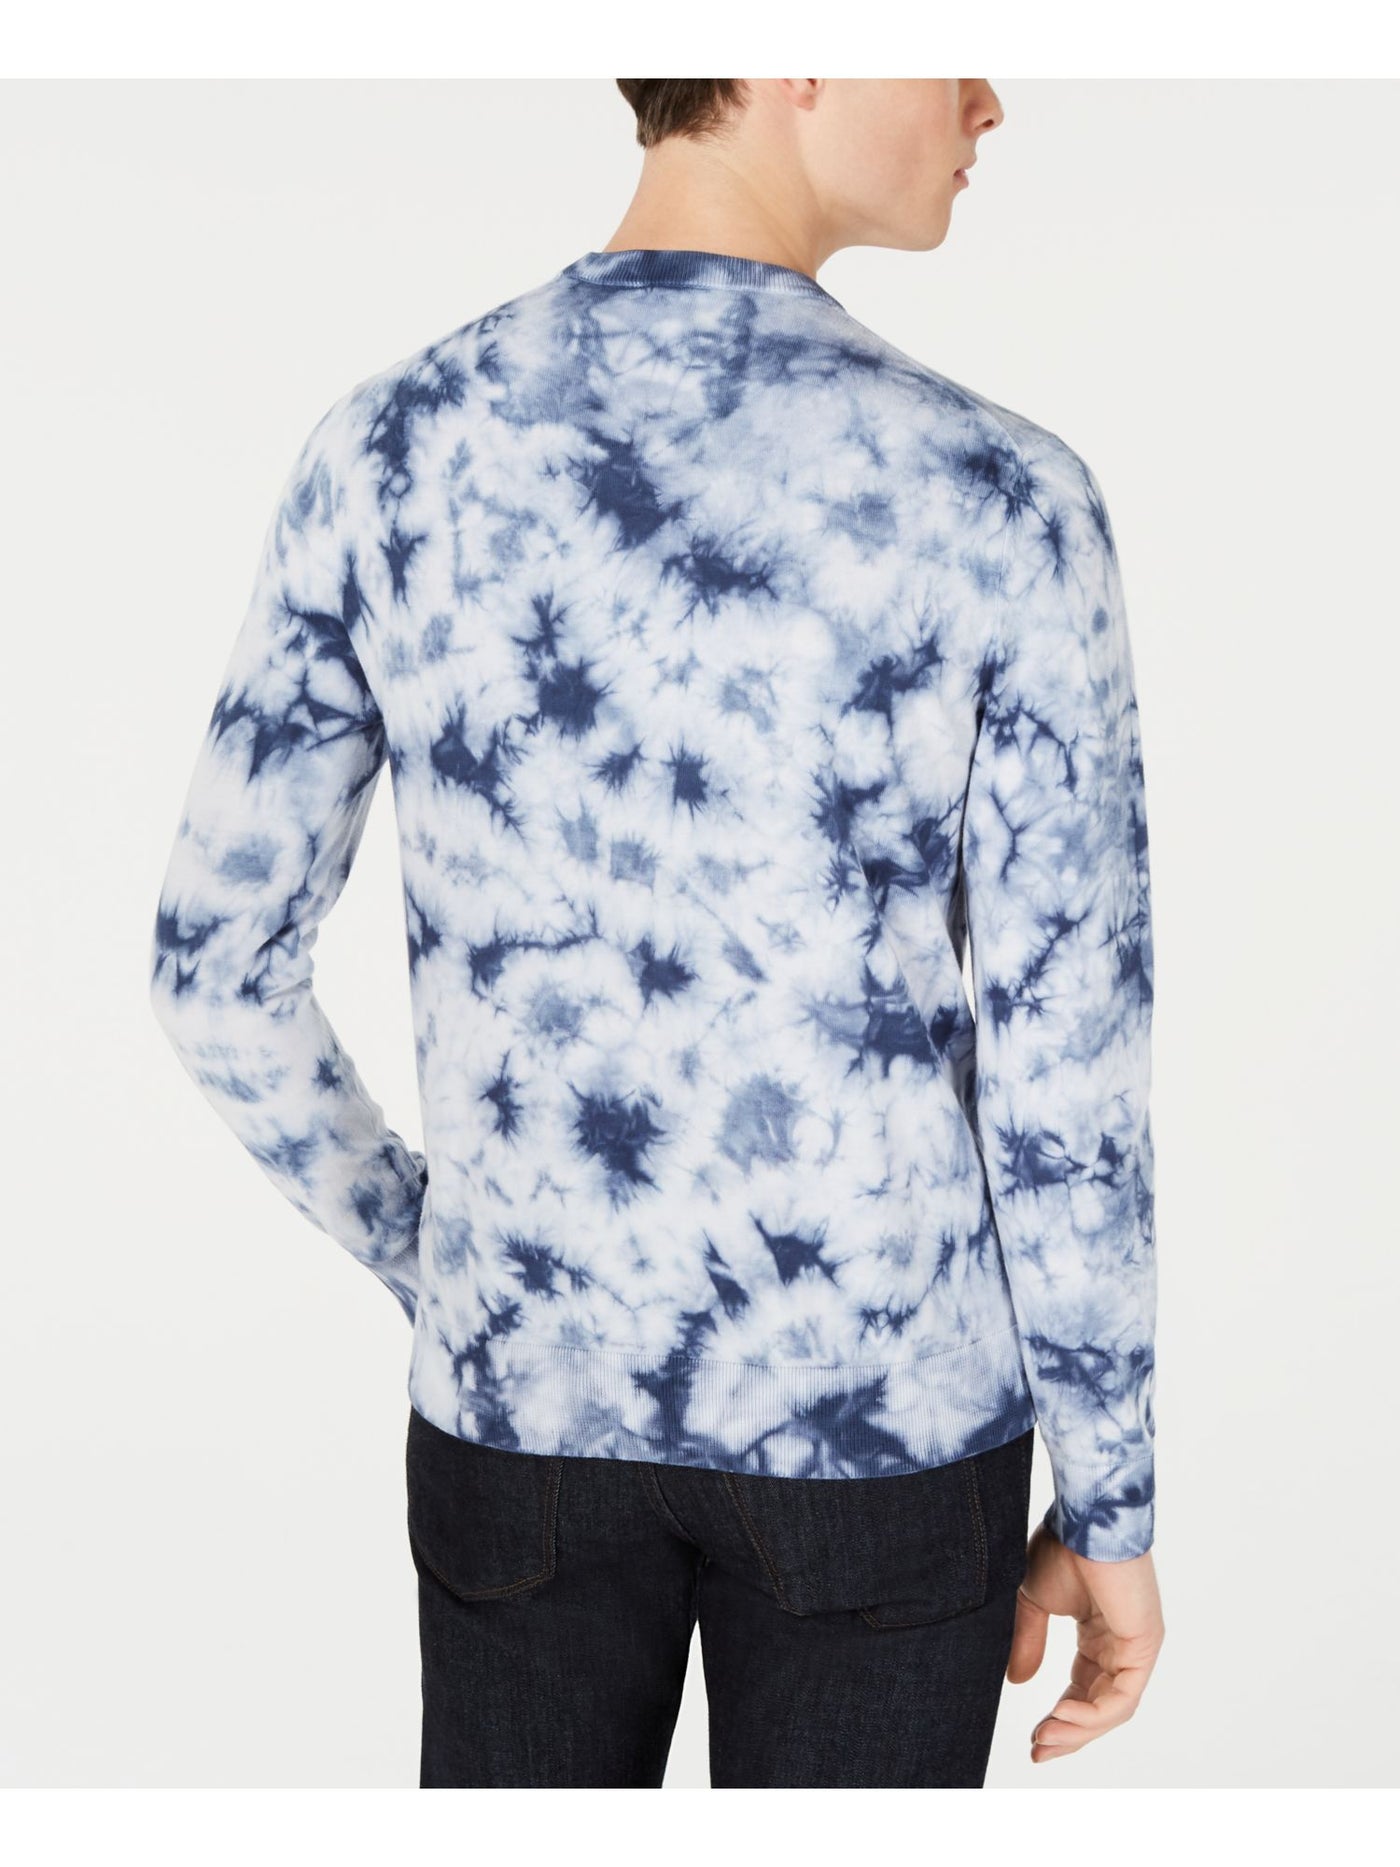 MICHAEL KORS Mens Light Blue Tie Dye Short Sleeve Crew Neck Pullover Sweater XL